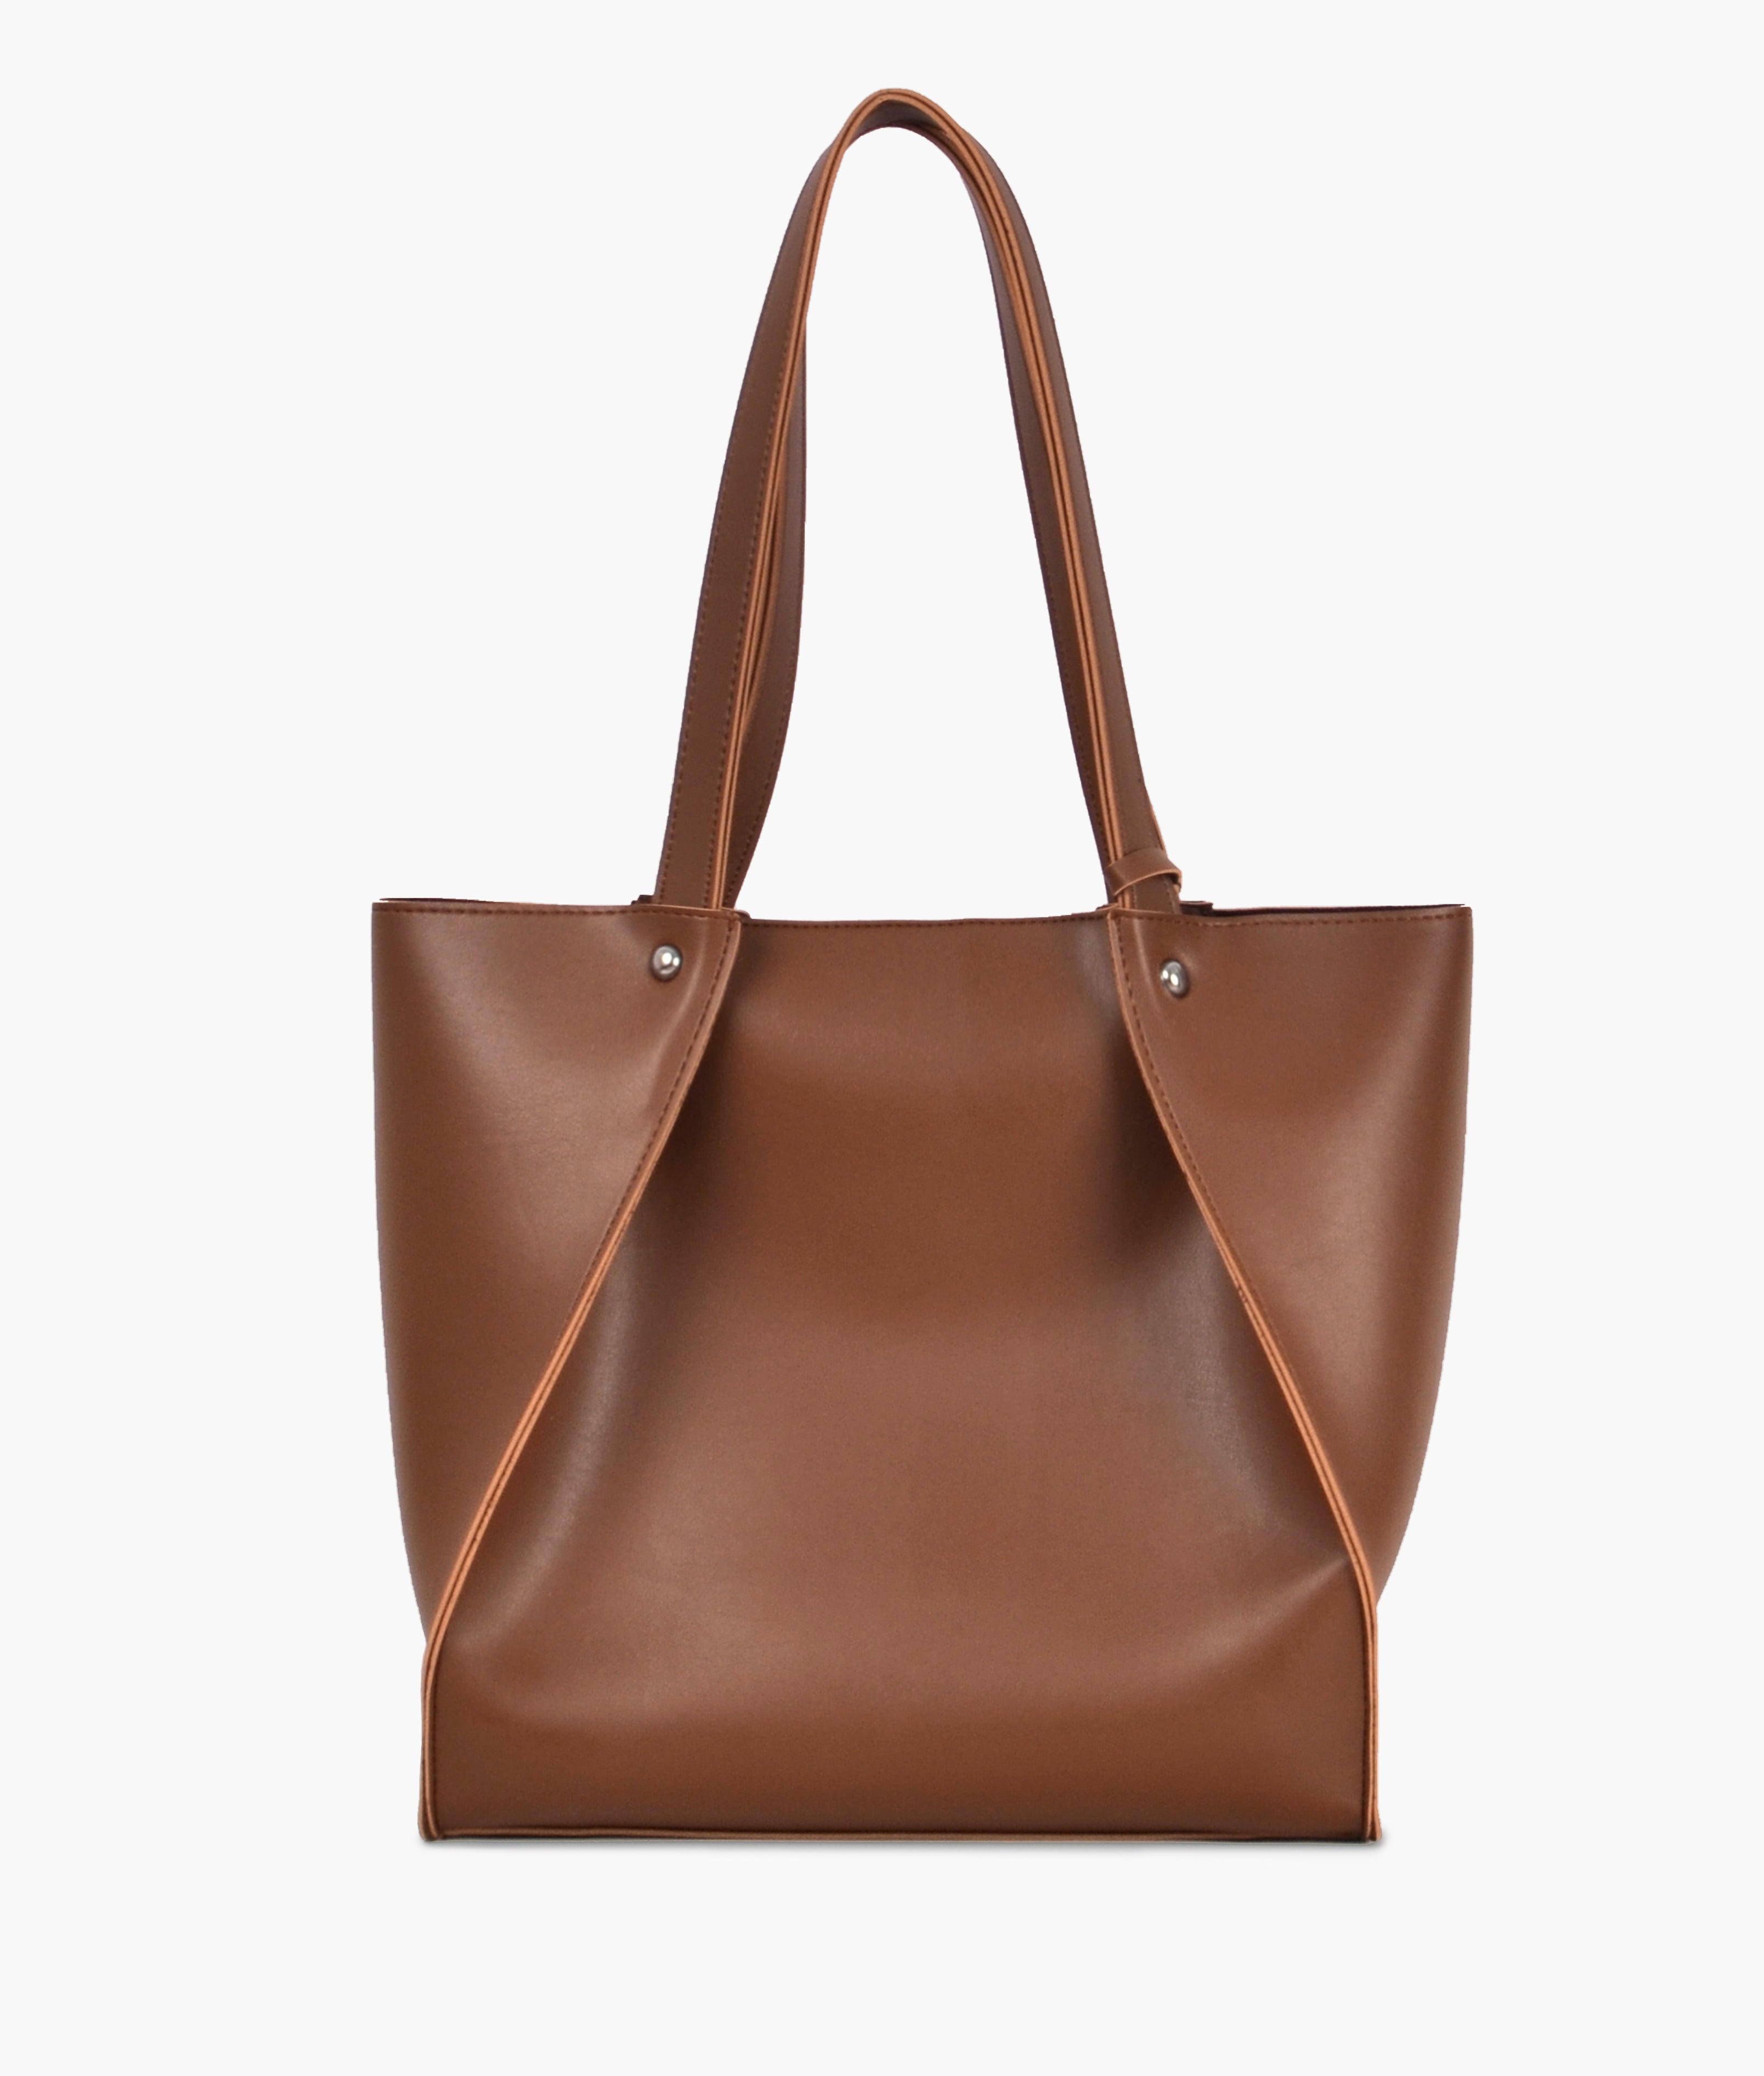 Brown shopping tote bag